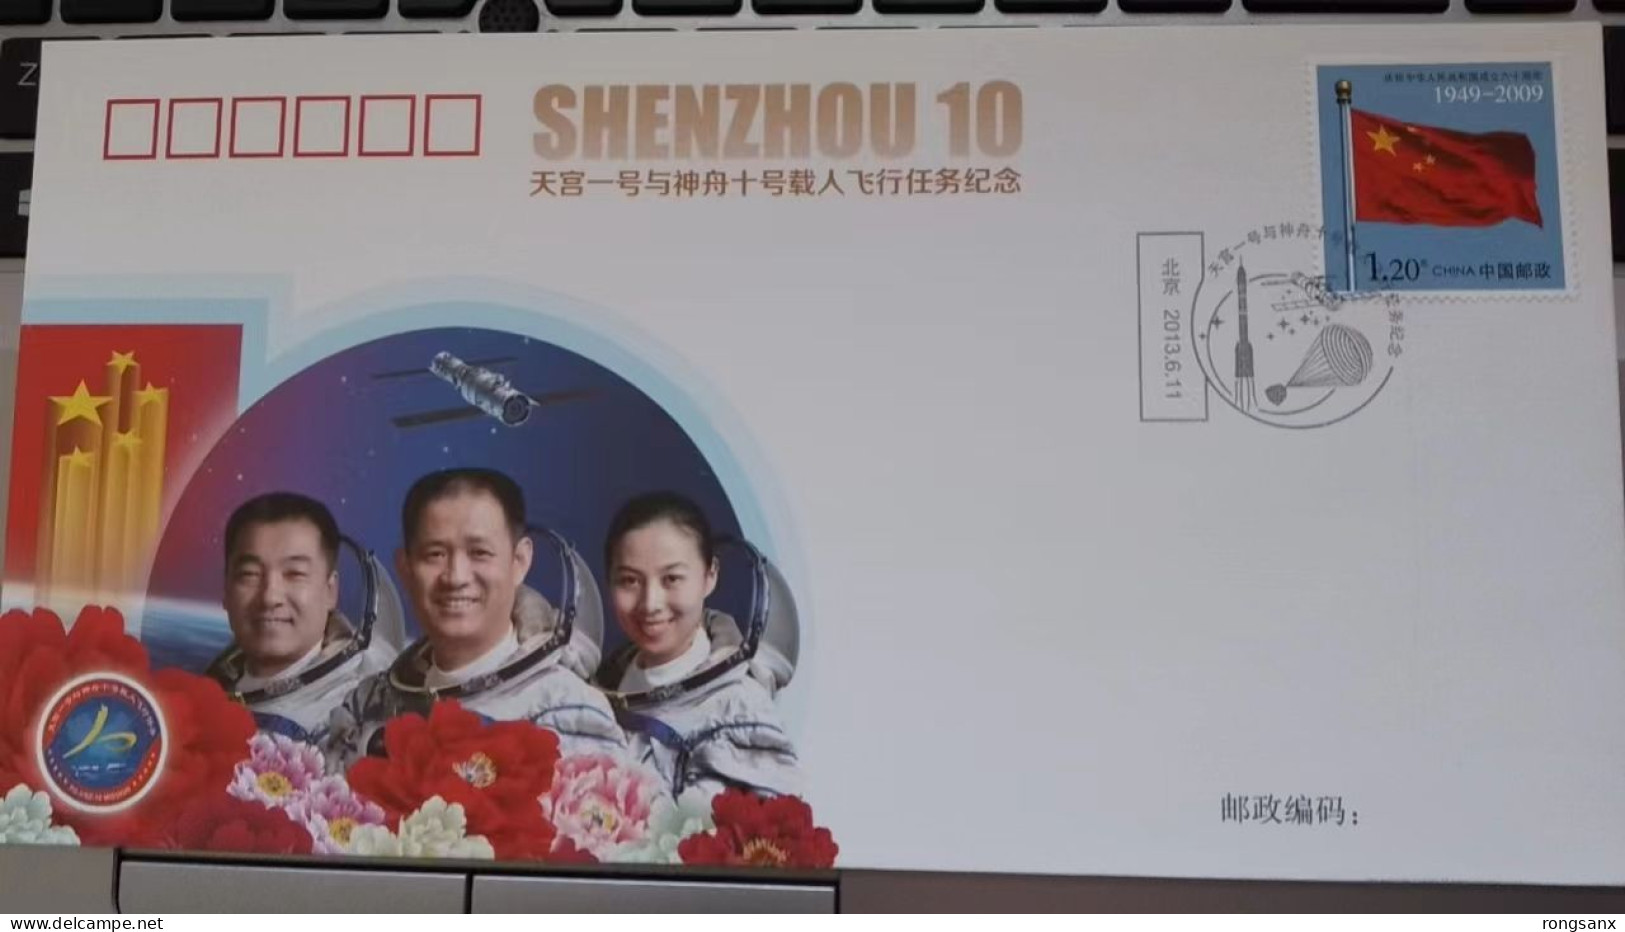 2013 CHINA SHENZHOU X SPACESHIP COMM. COVER - Storia Postale